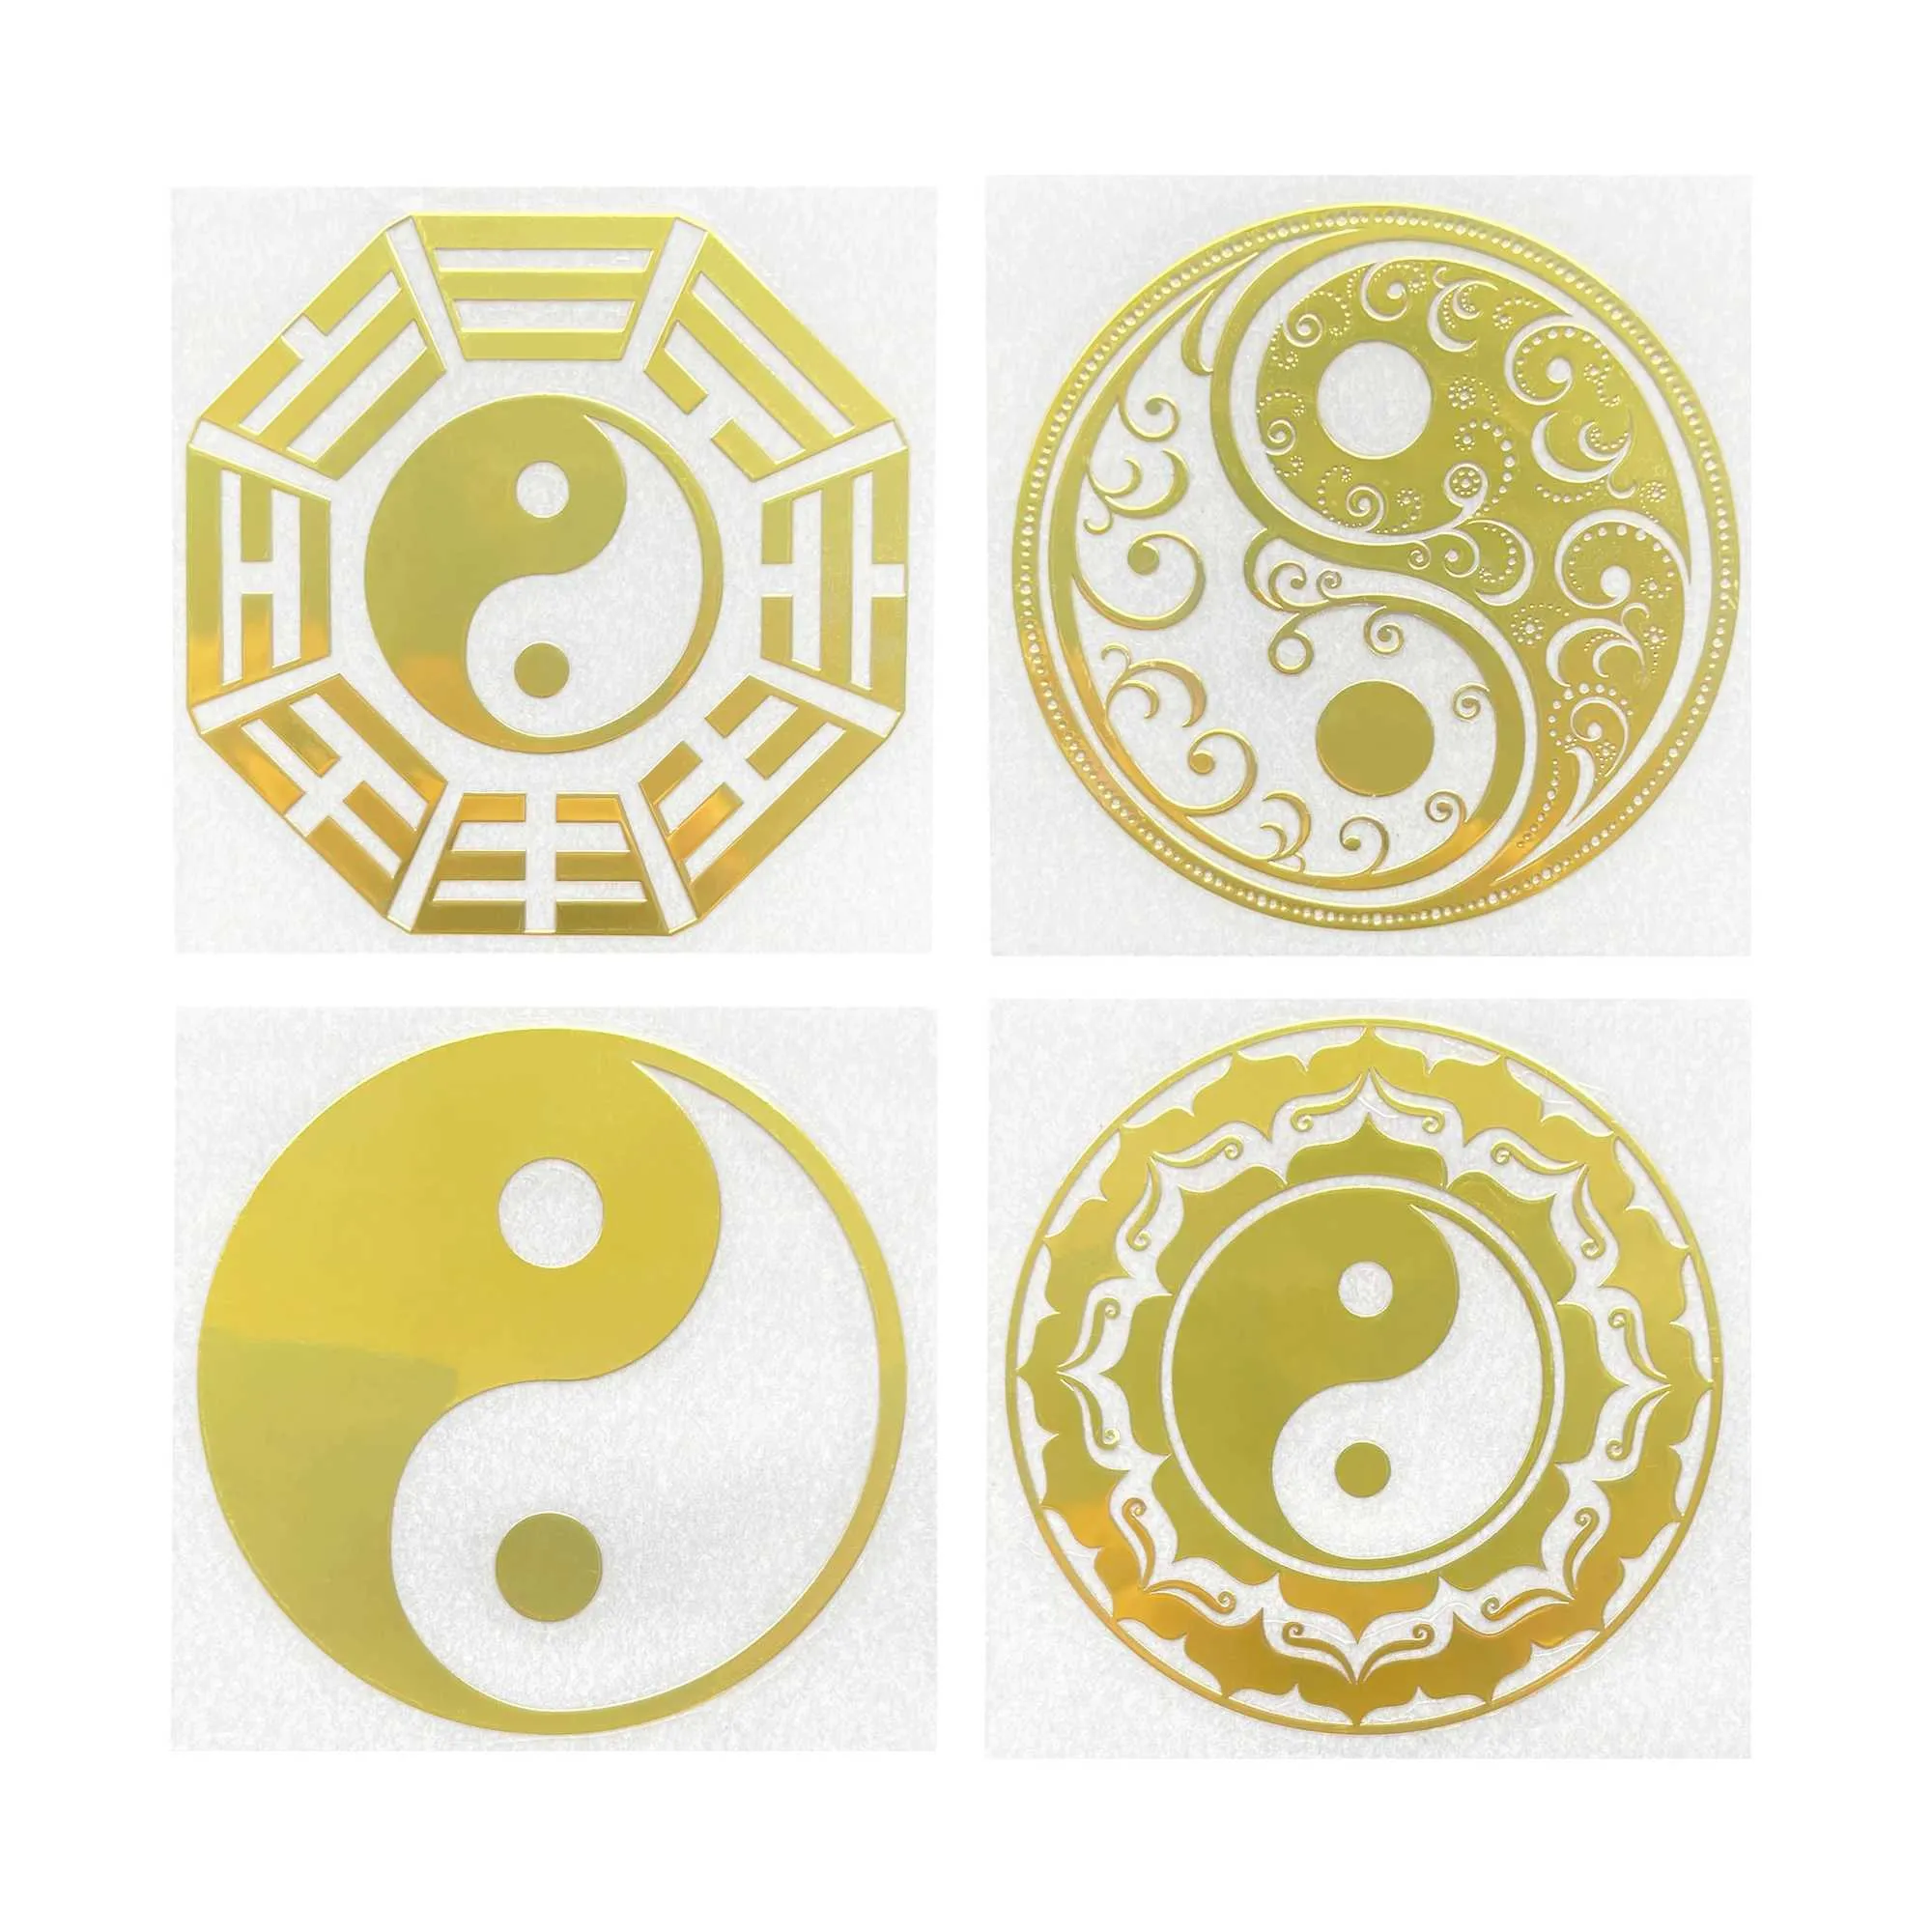 Tattoo overdracht vijf elementen yin en yang tai chi acht diagrammen patroon metalen stickers mobiele telefoon stickers laptop auto stickers decoratie 240426